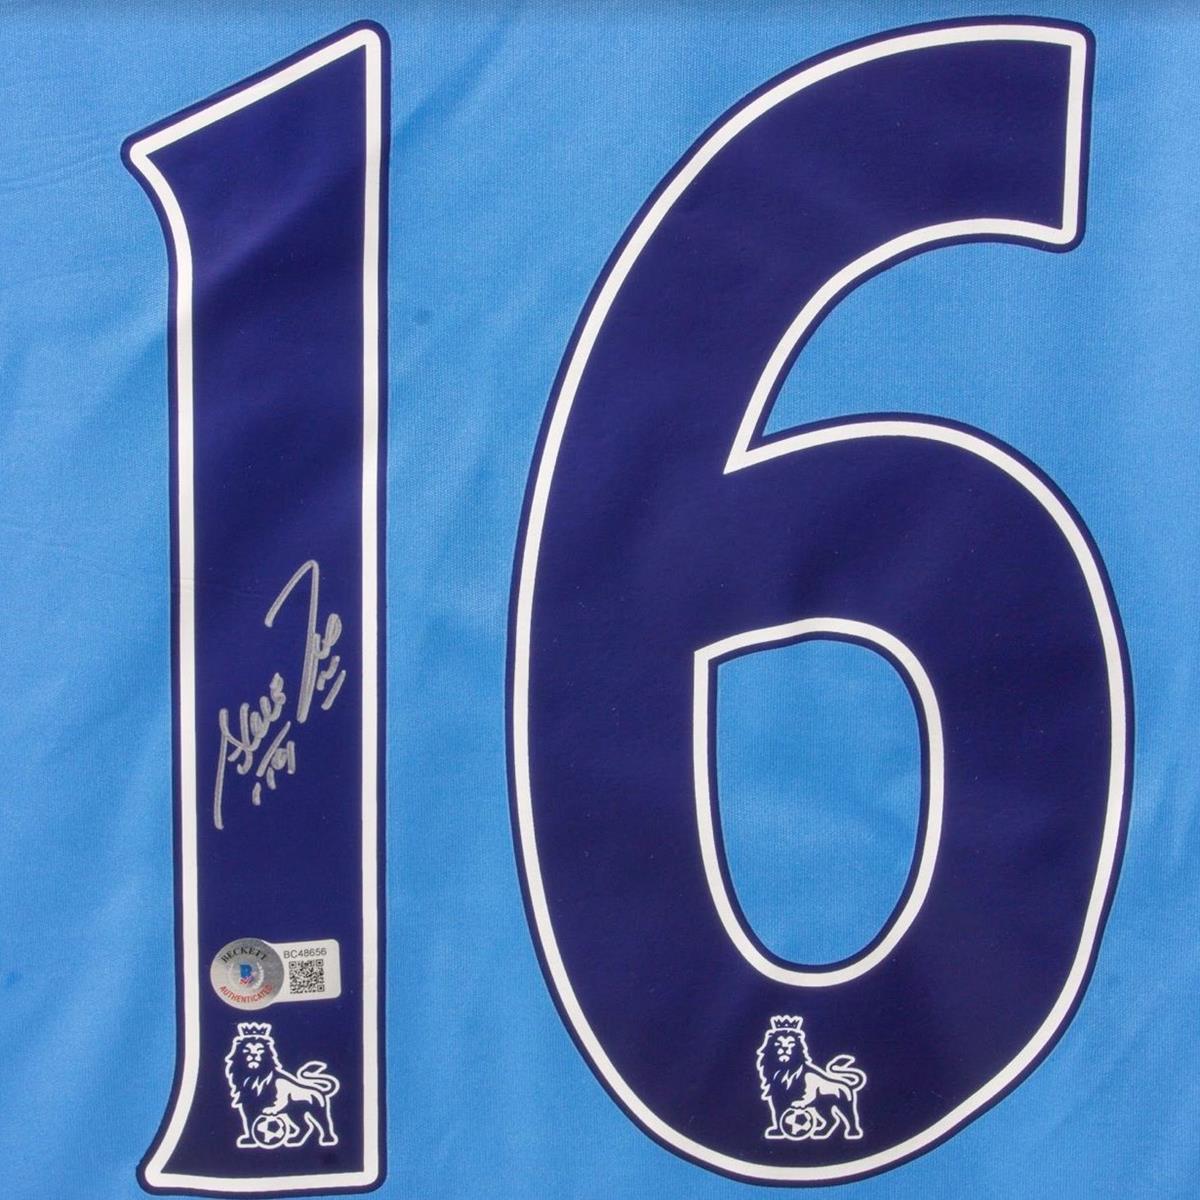 Kun Aguero Autographed Manchester City Soccer Jersey - BAS